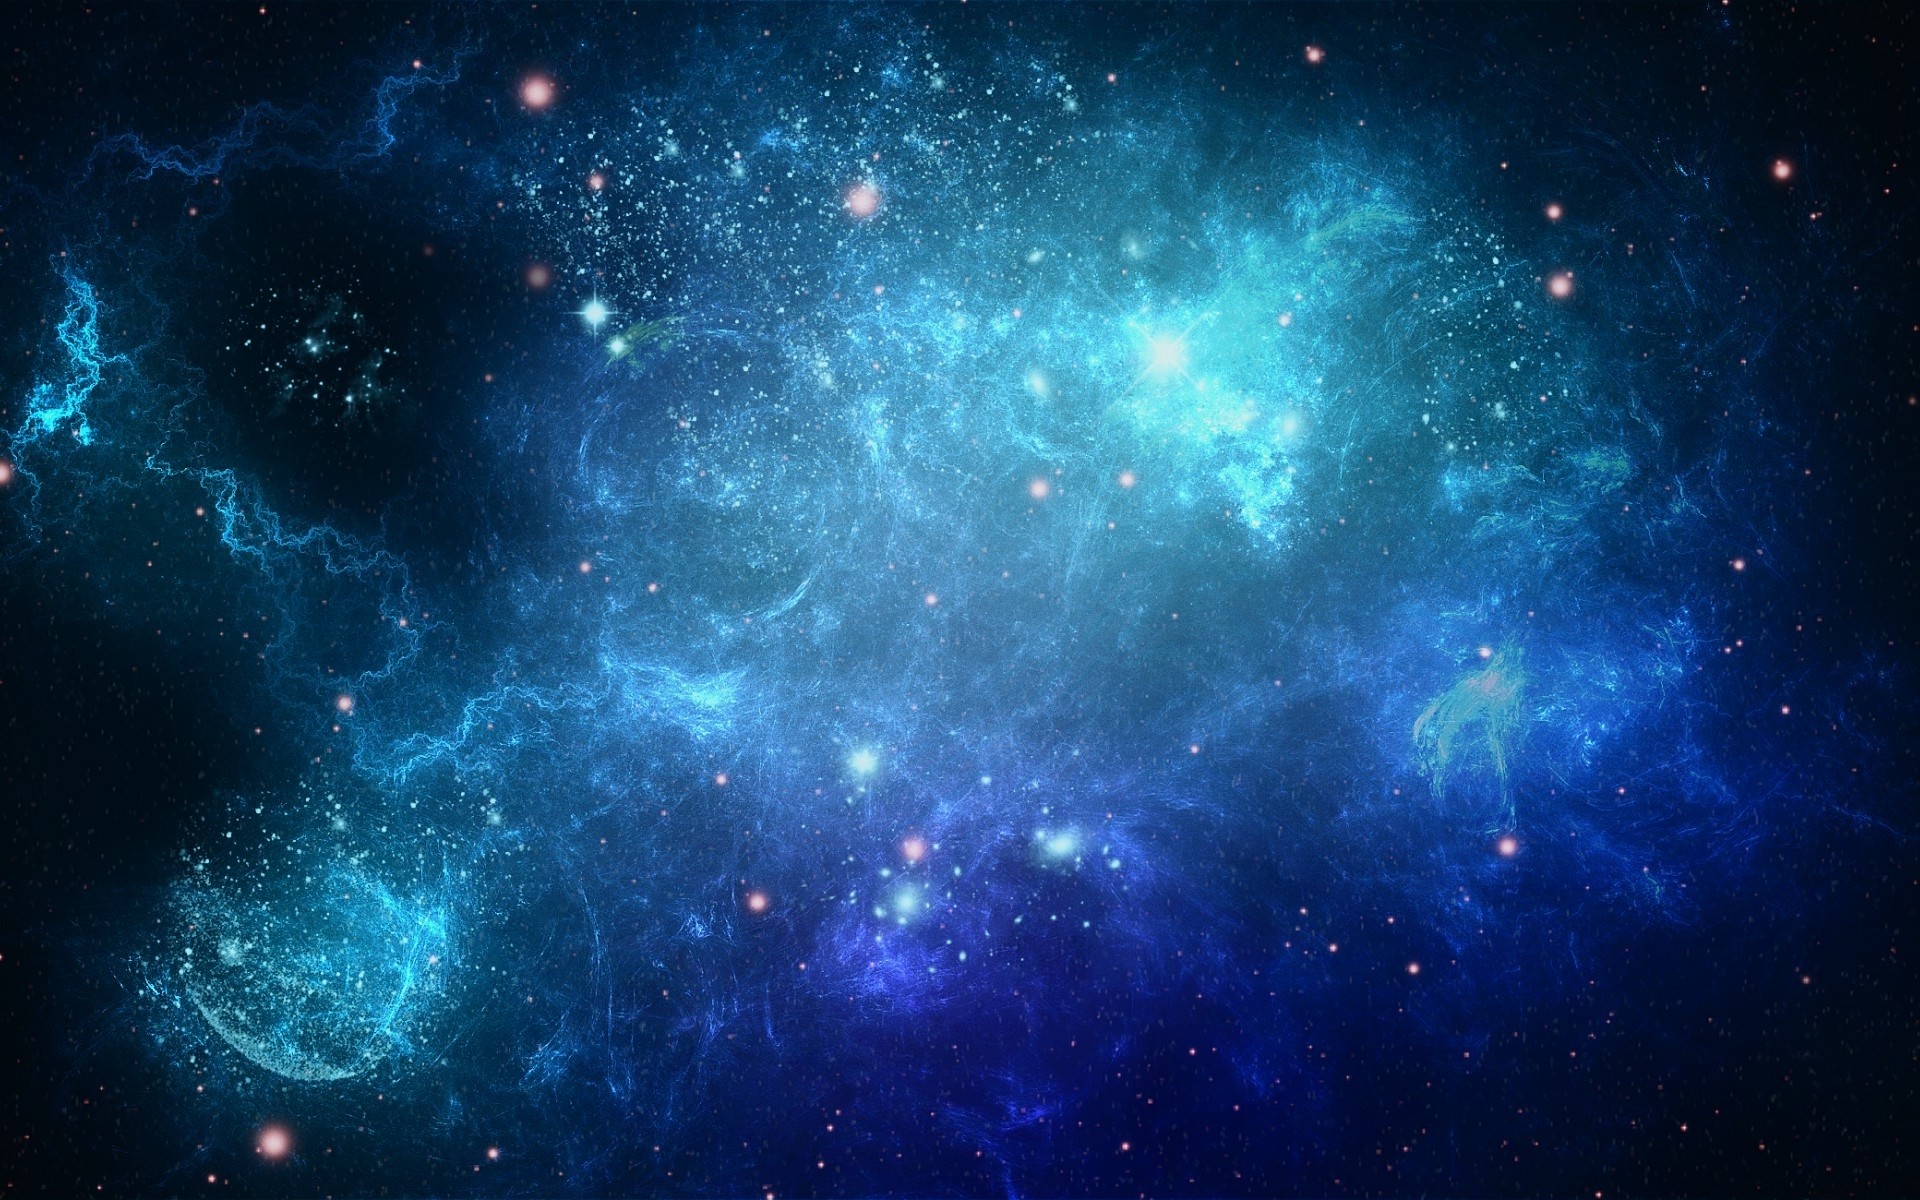 Blue Galaxy wallpaper ·① Download free amazing full HD ...